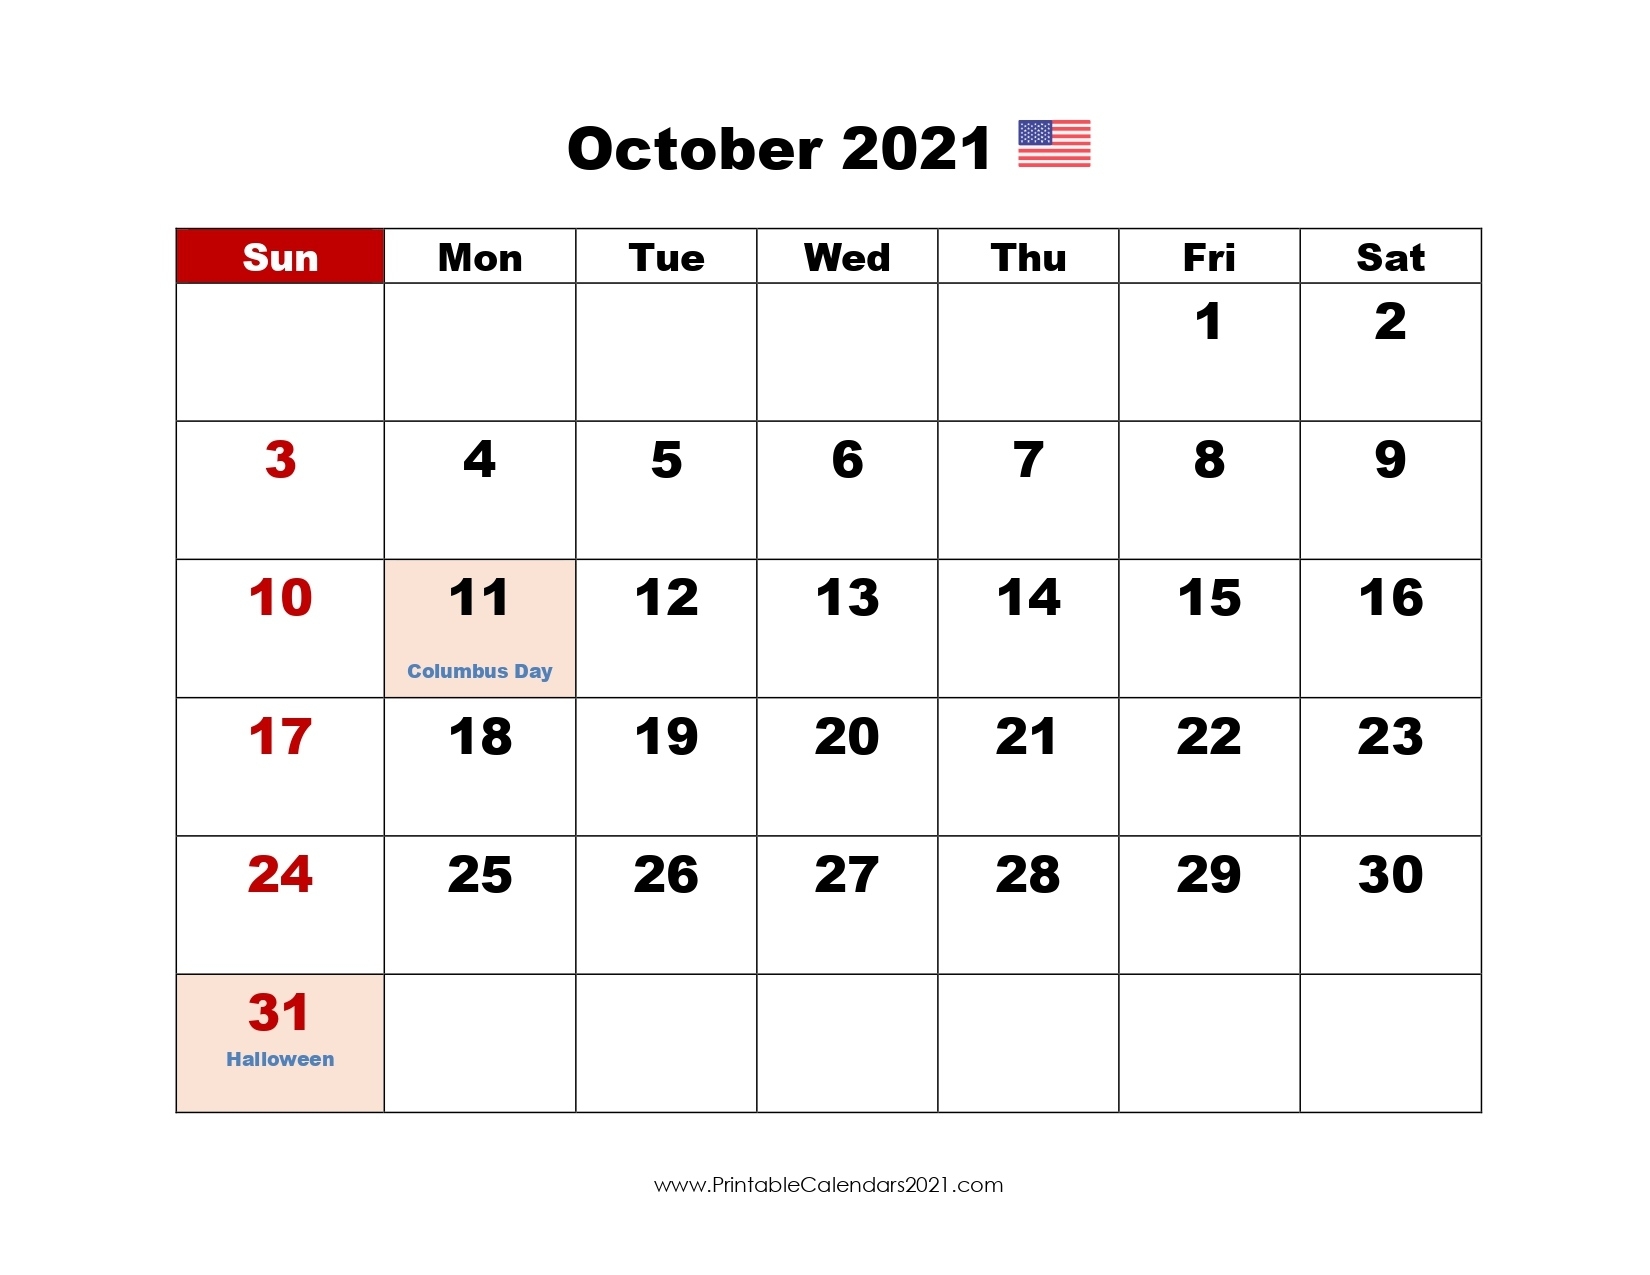 42+ October 2021 Calendar Printable, October 2021 Calendar Pdf Blank 2021 Calendar Of October